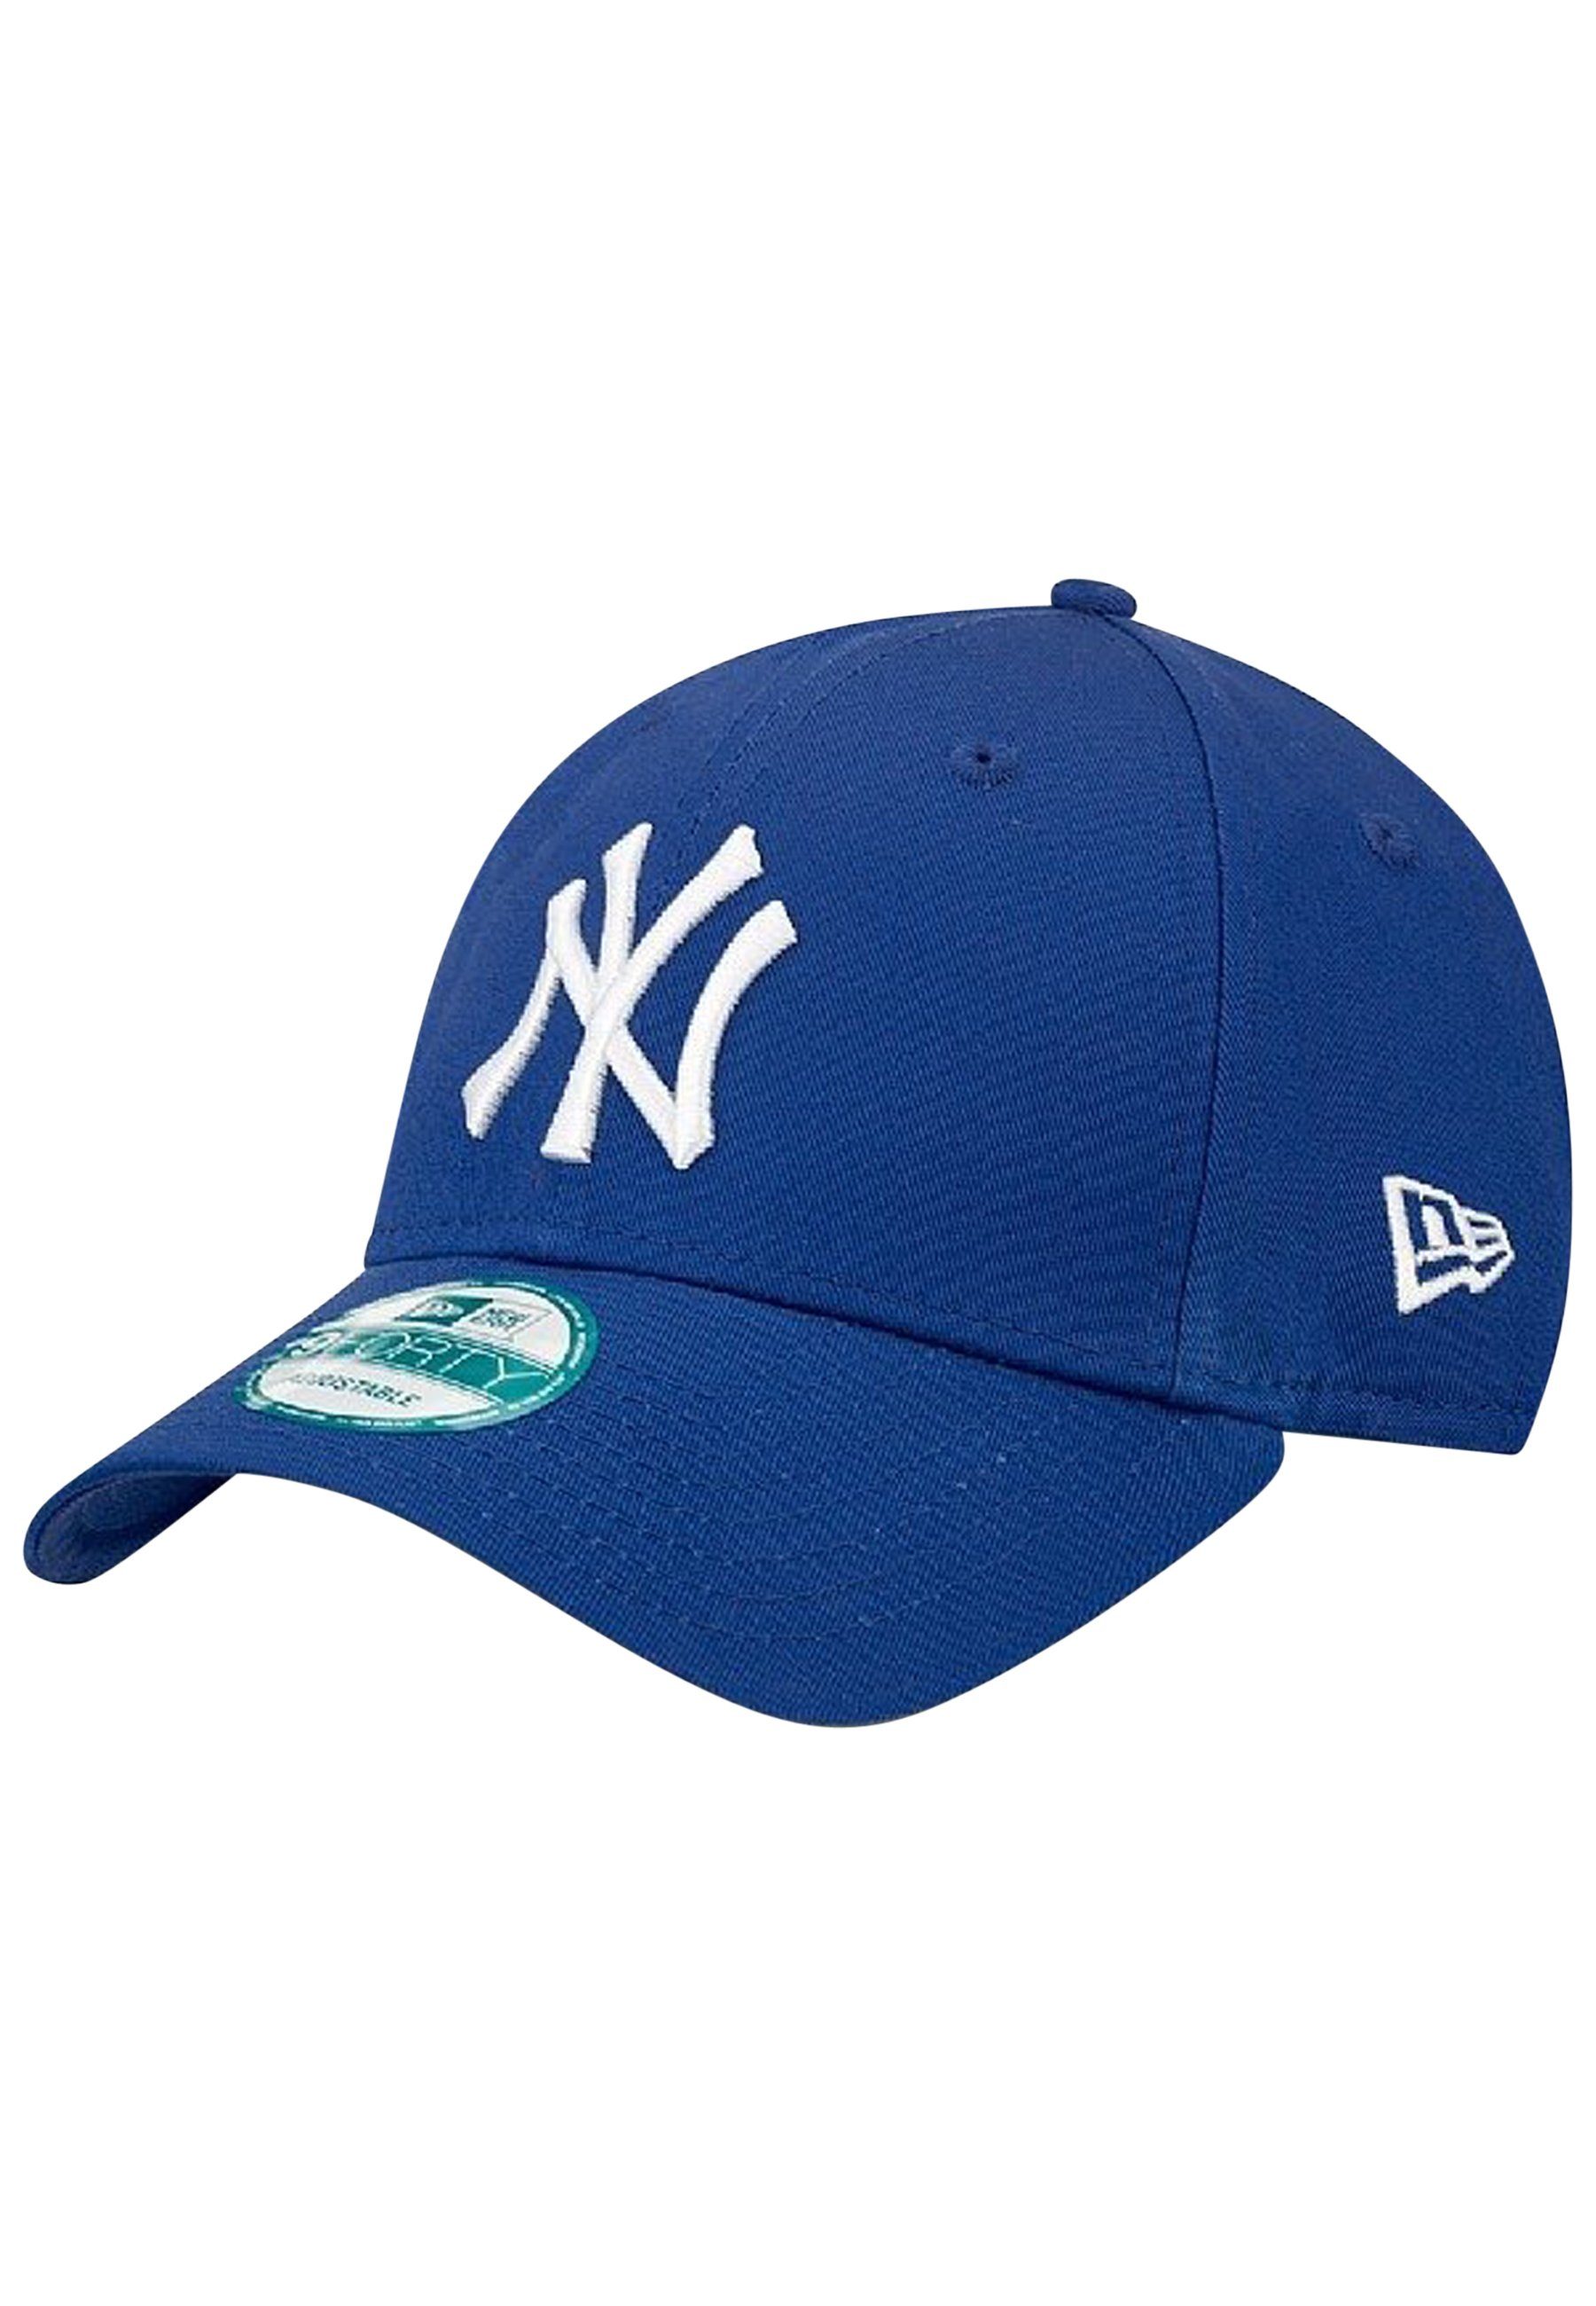              (1-St) Era Cap York New New royalblau Yankees Snapback